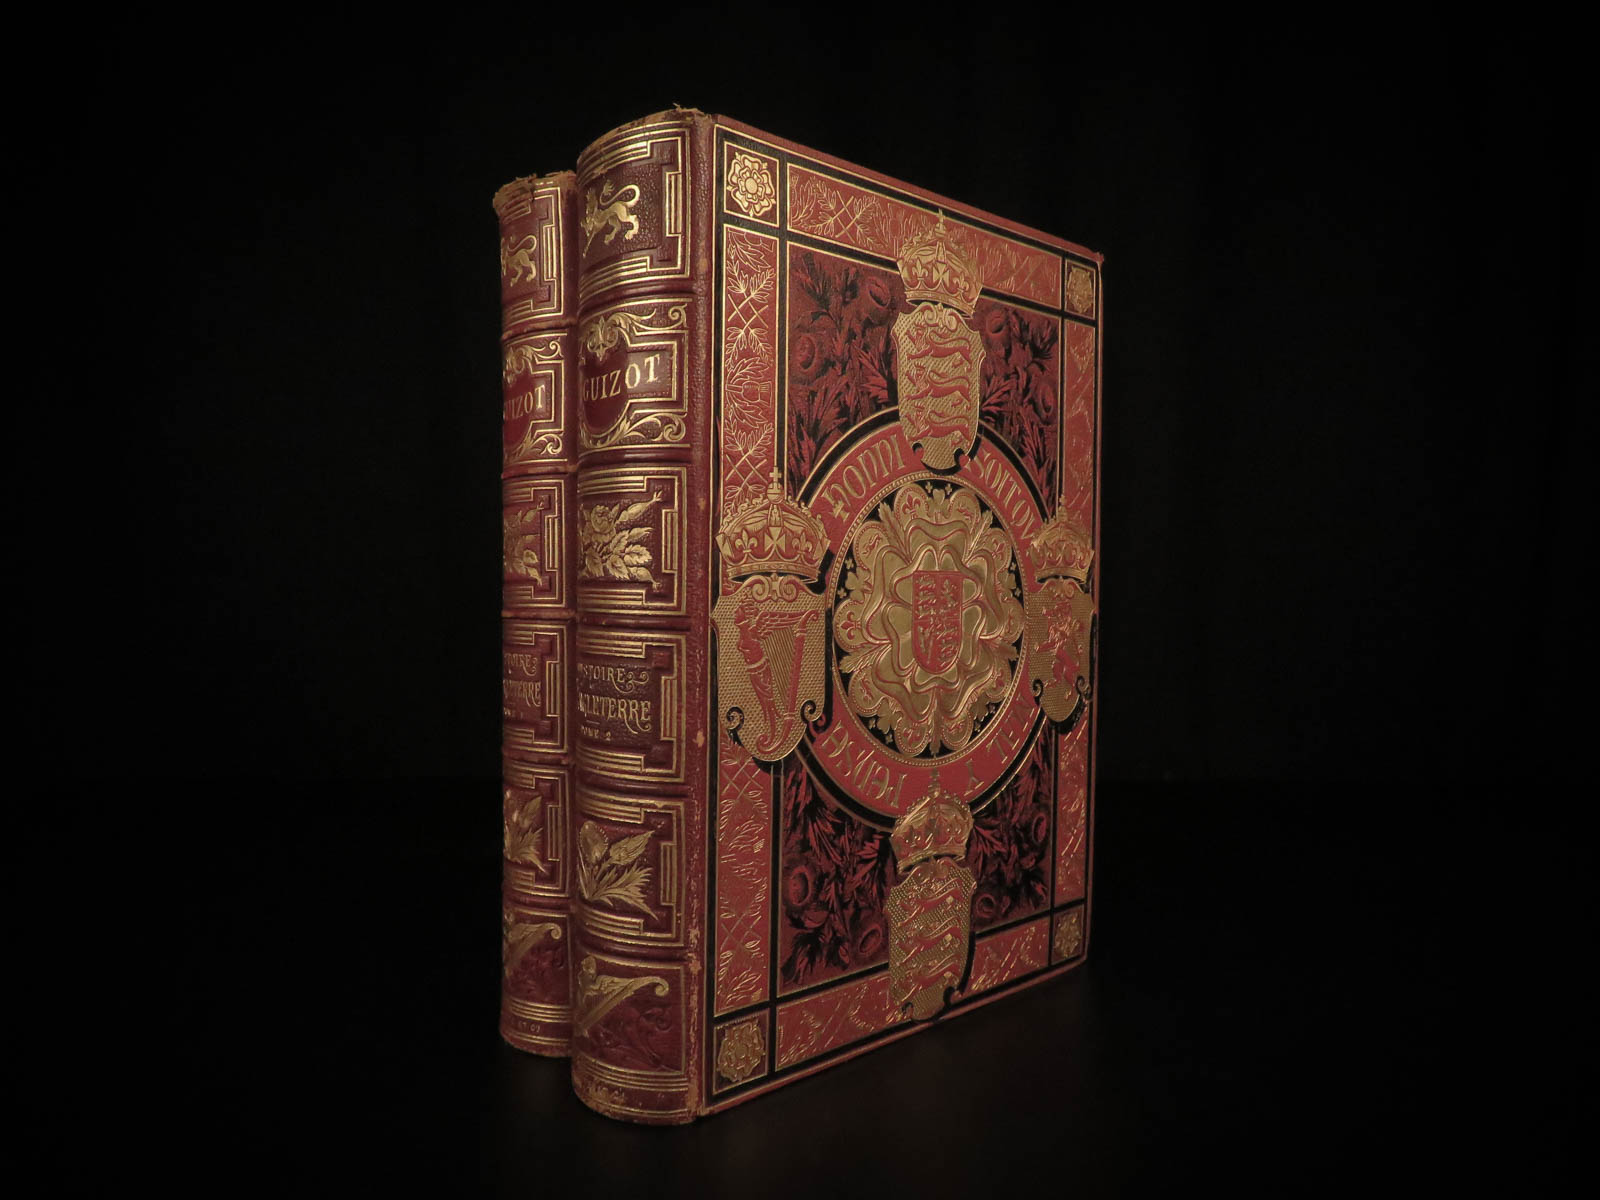 Antique Books, History Guizont, England, 5 Volumes, 1876, 19th